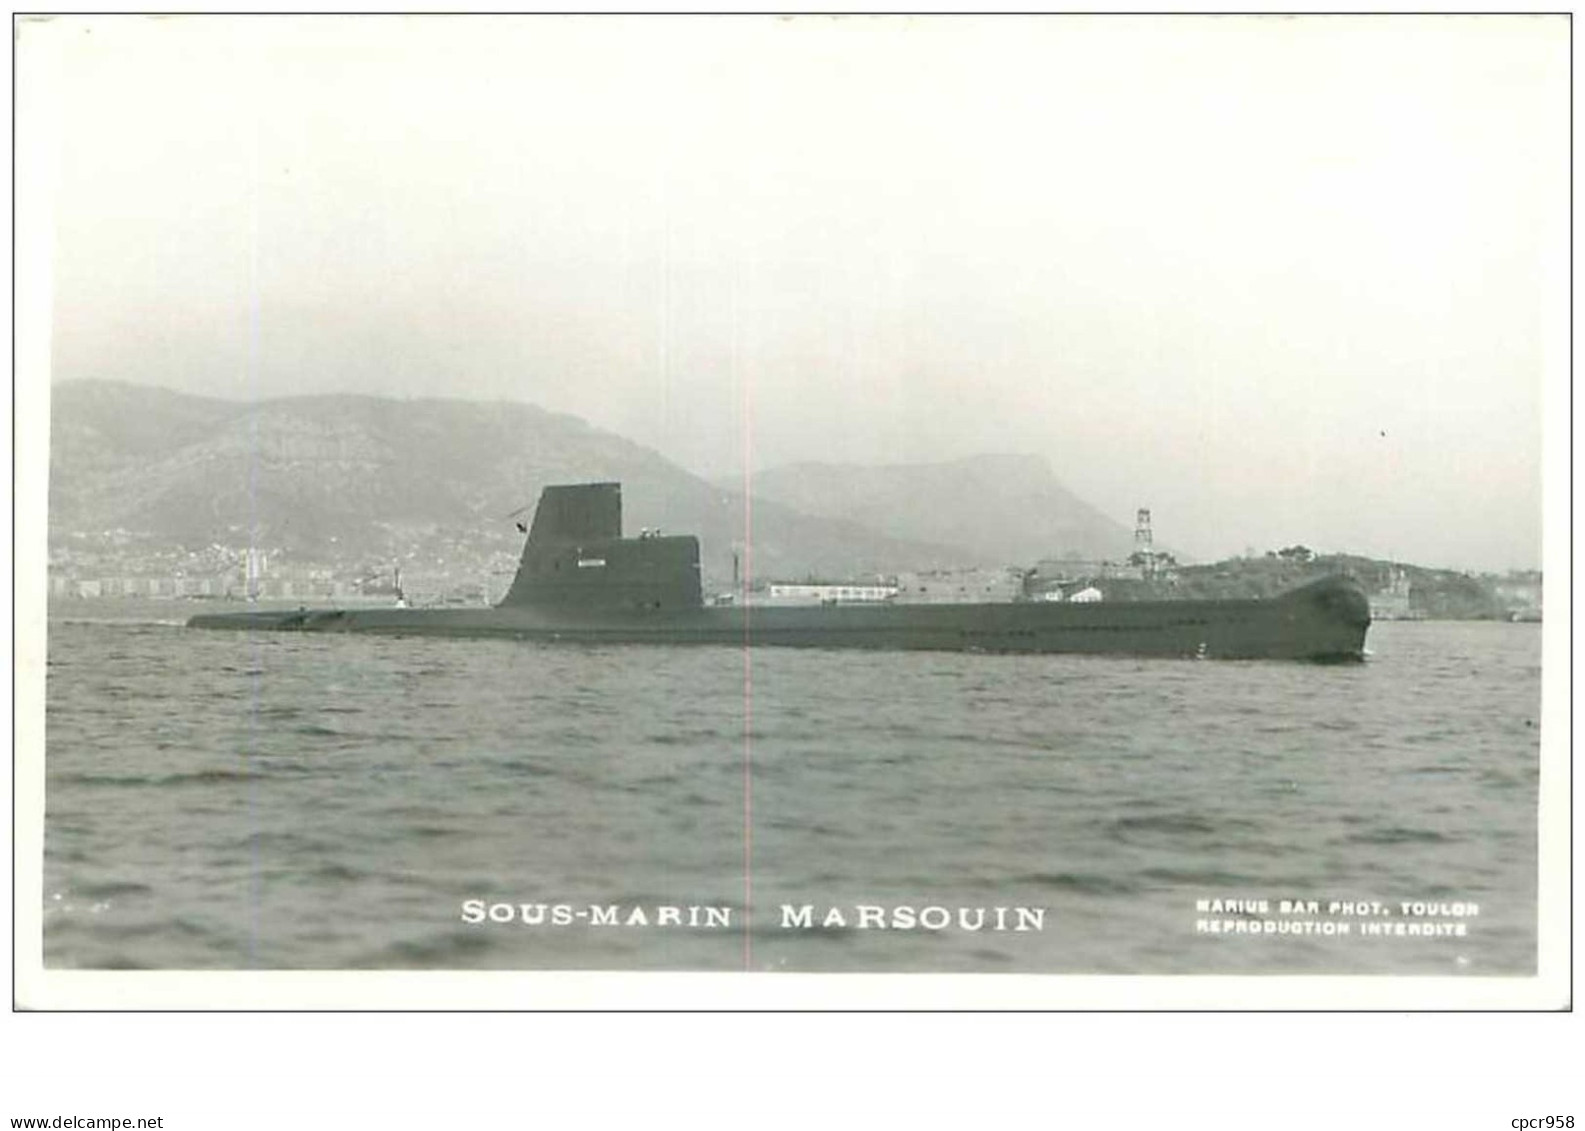 SOUS-MARINS.n°24851.PHOTO DE MARIUS BAR.MARSOUIN - Sottomarini